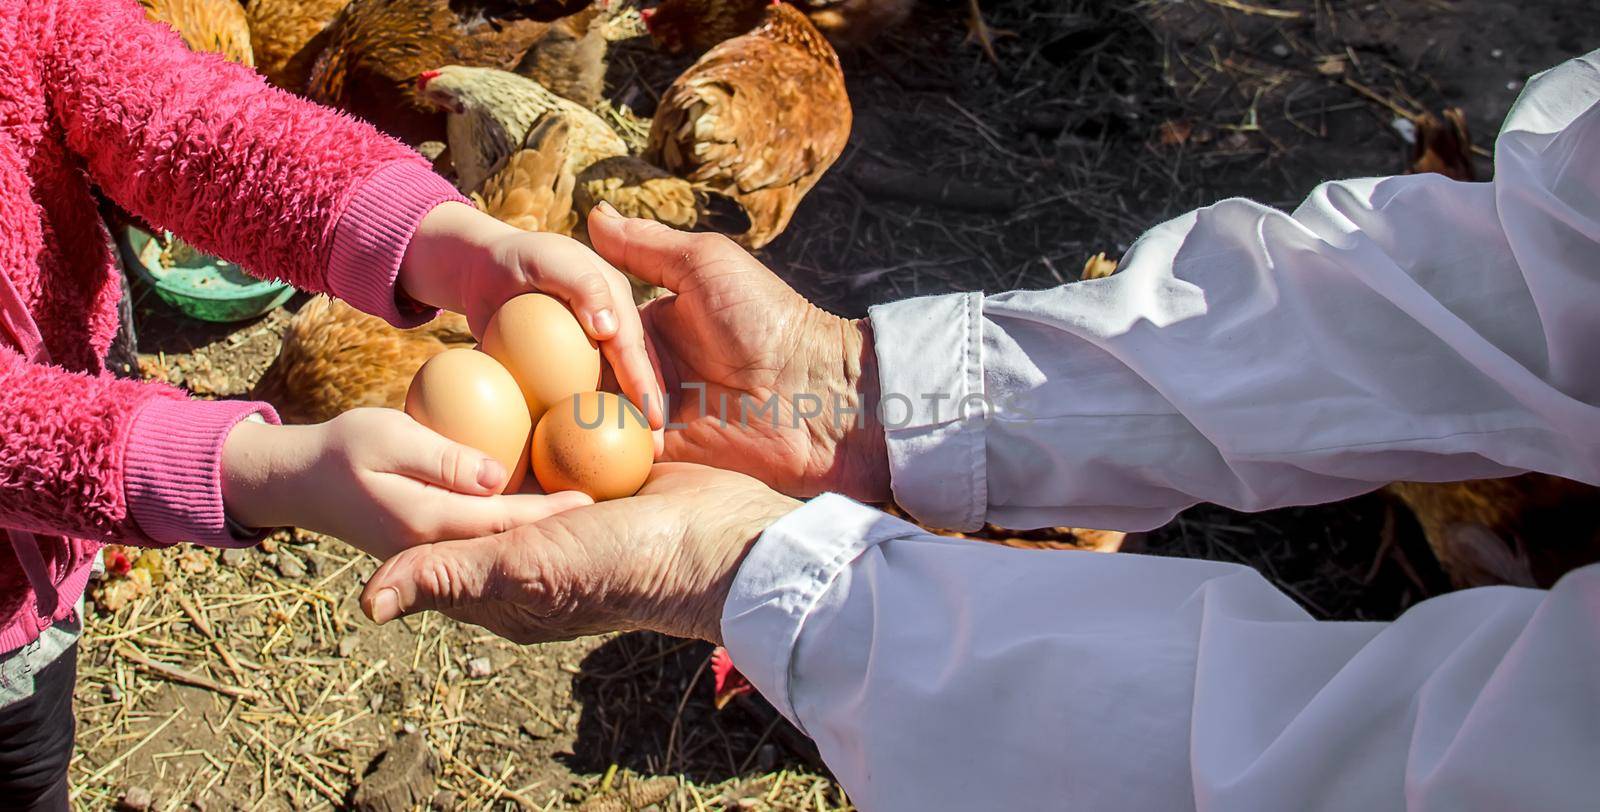 Chicken domestic eggs in hands. Selective focus.